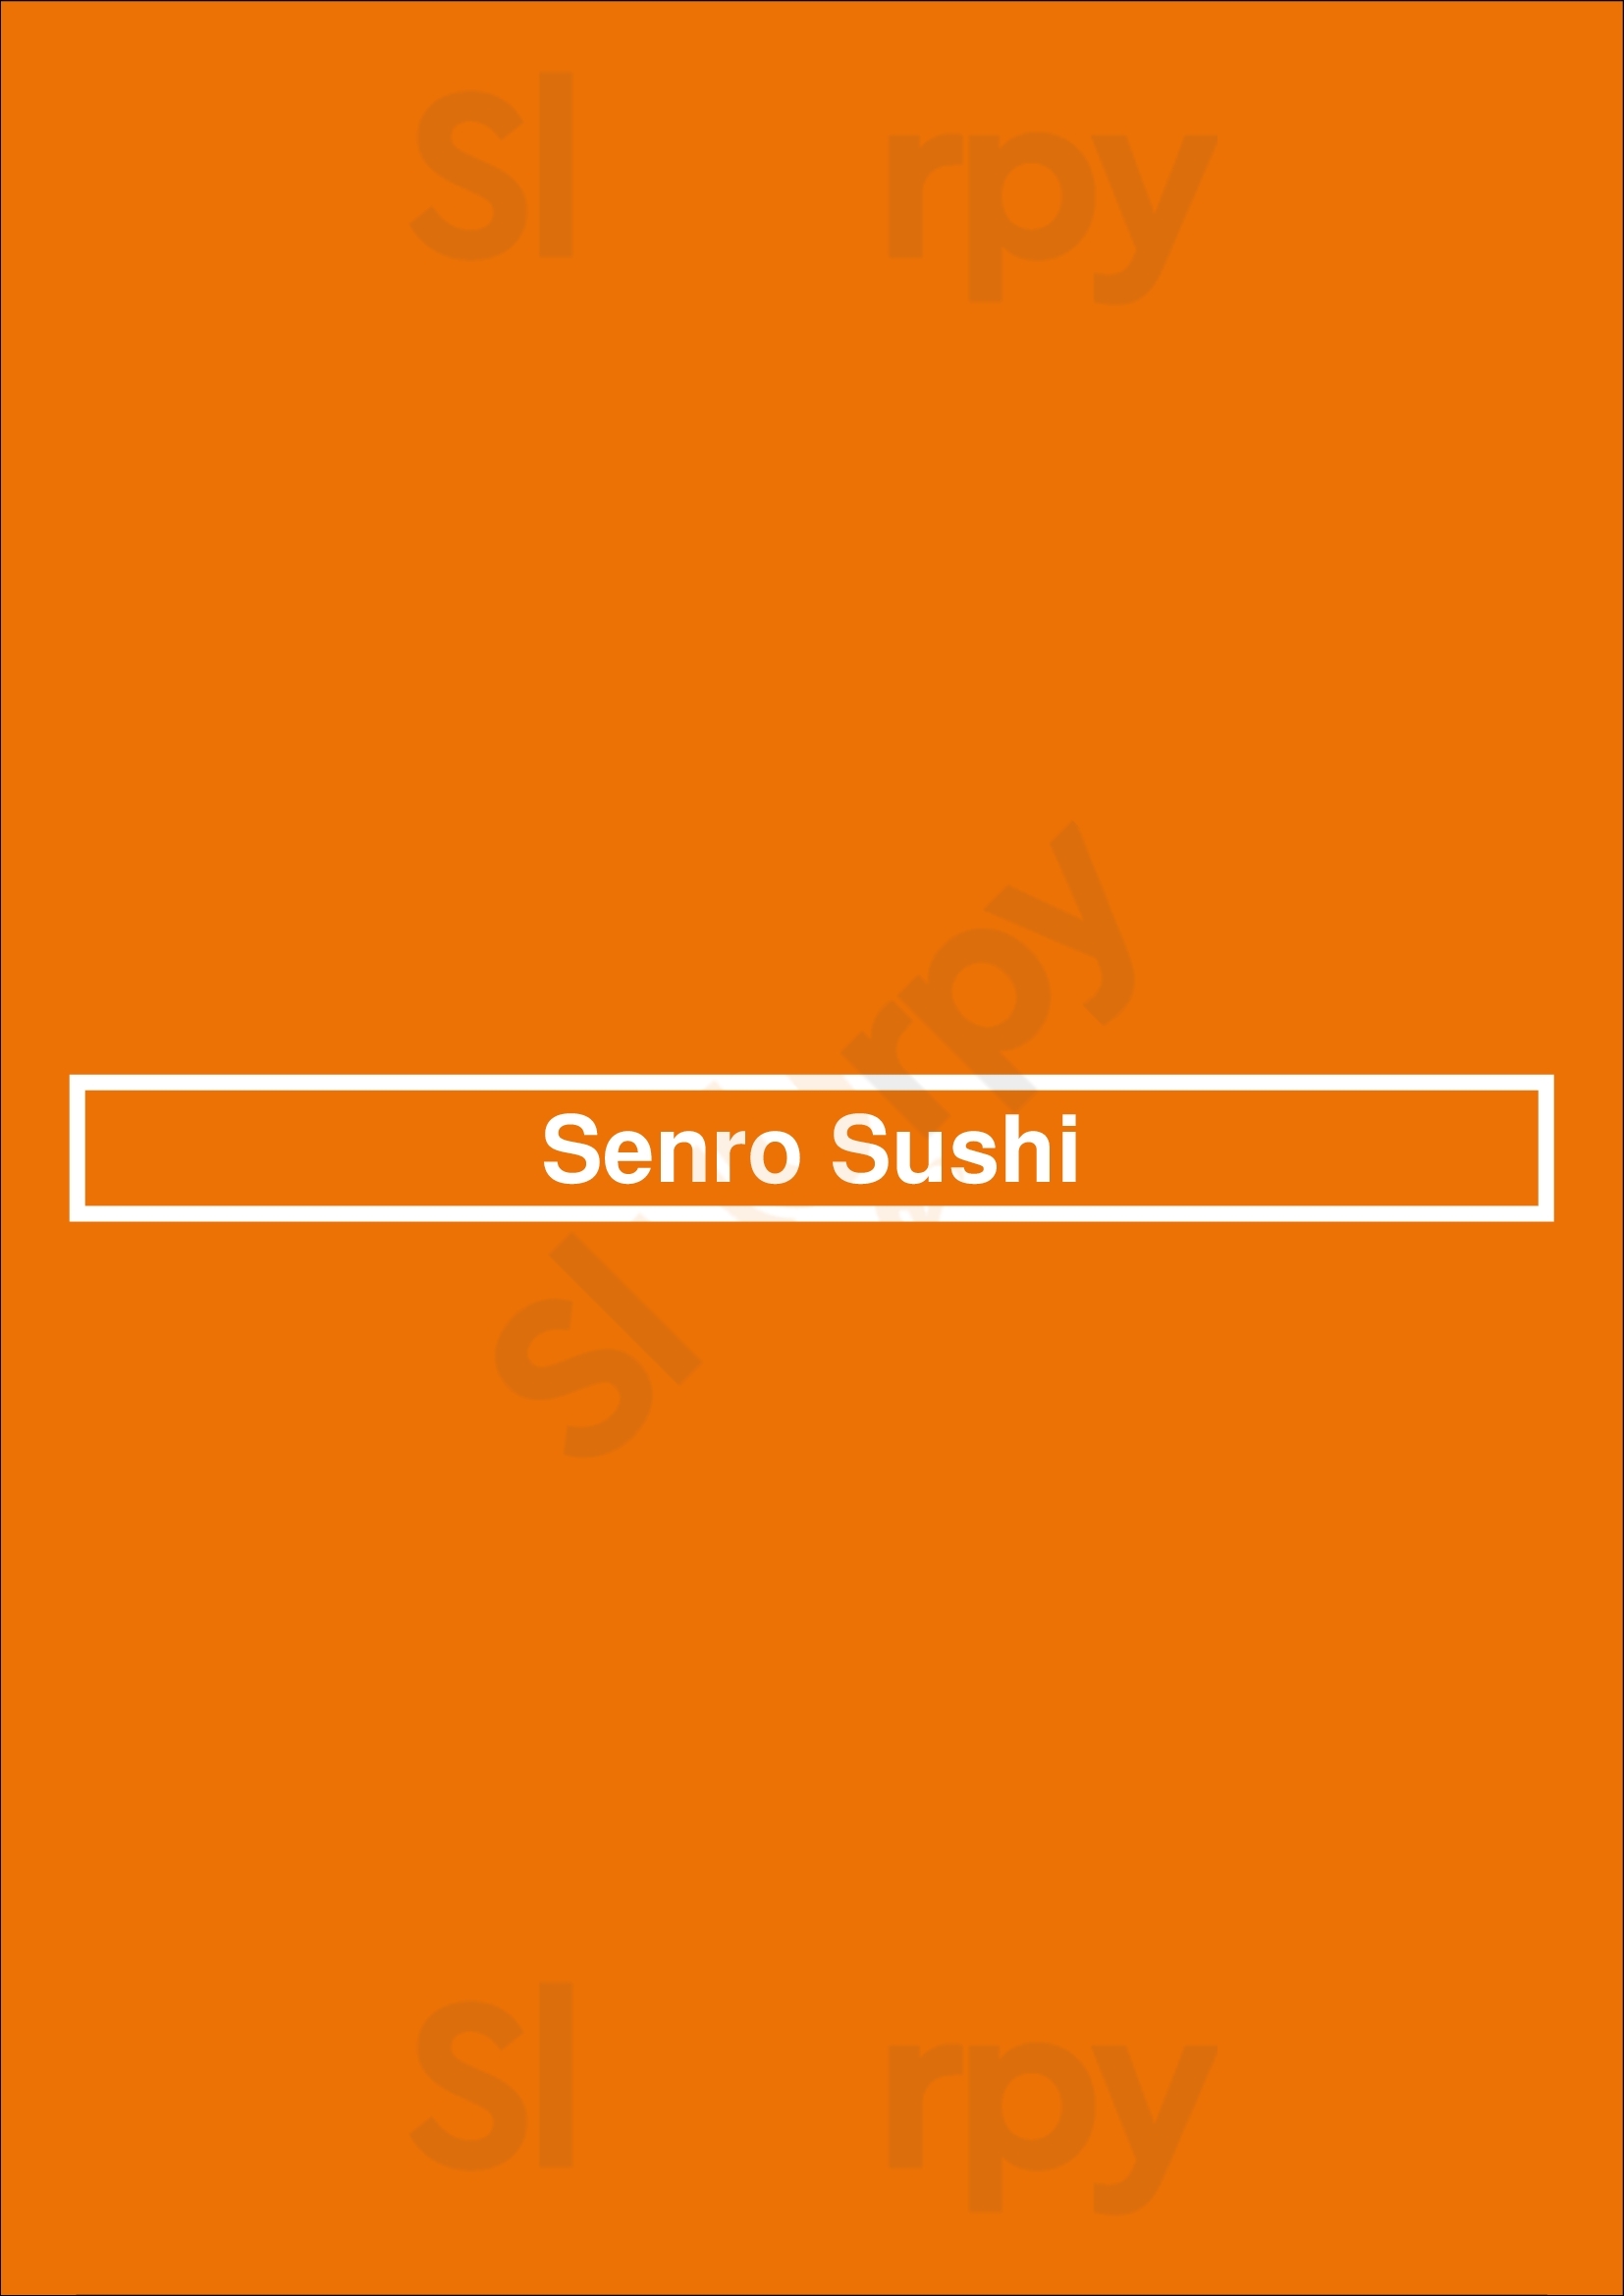 Senro Sushi San Jose Menu - 1